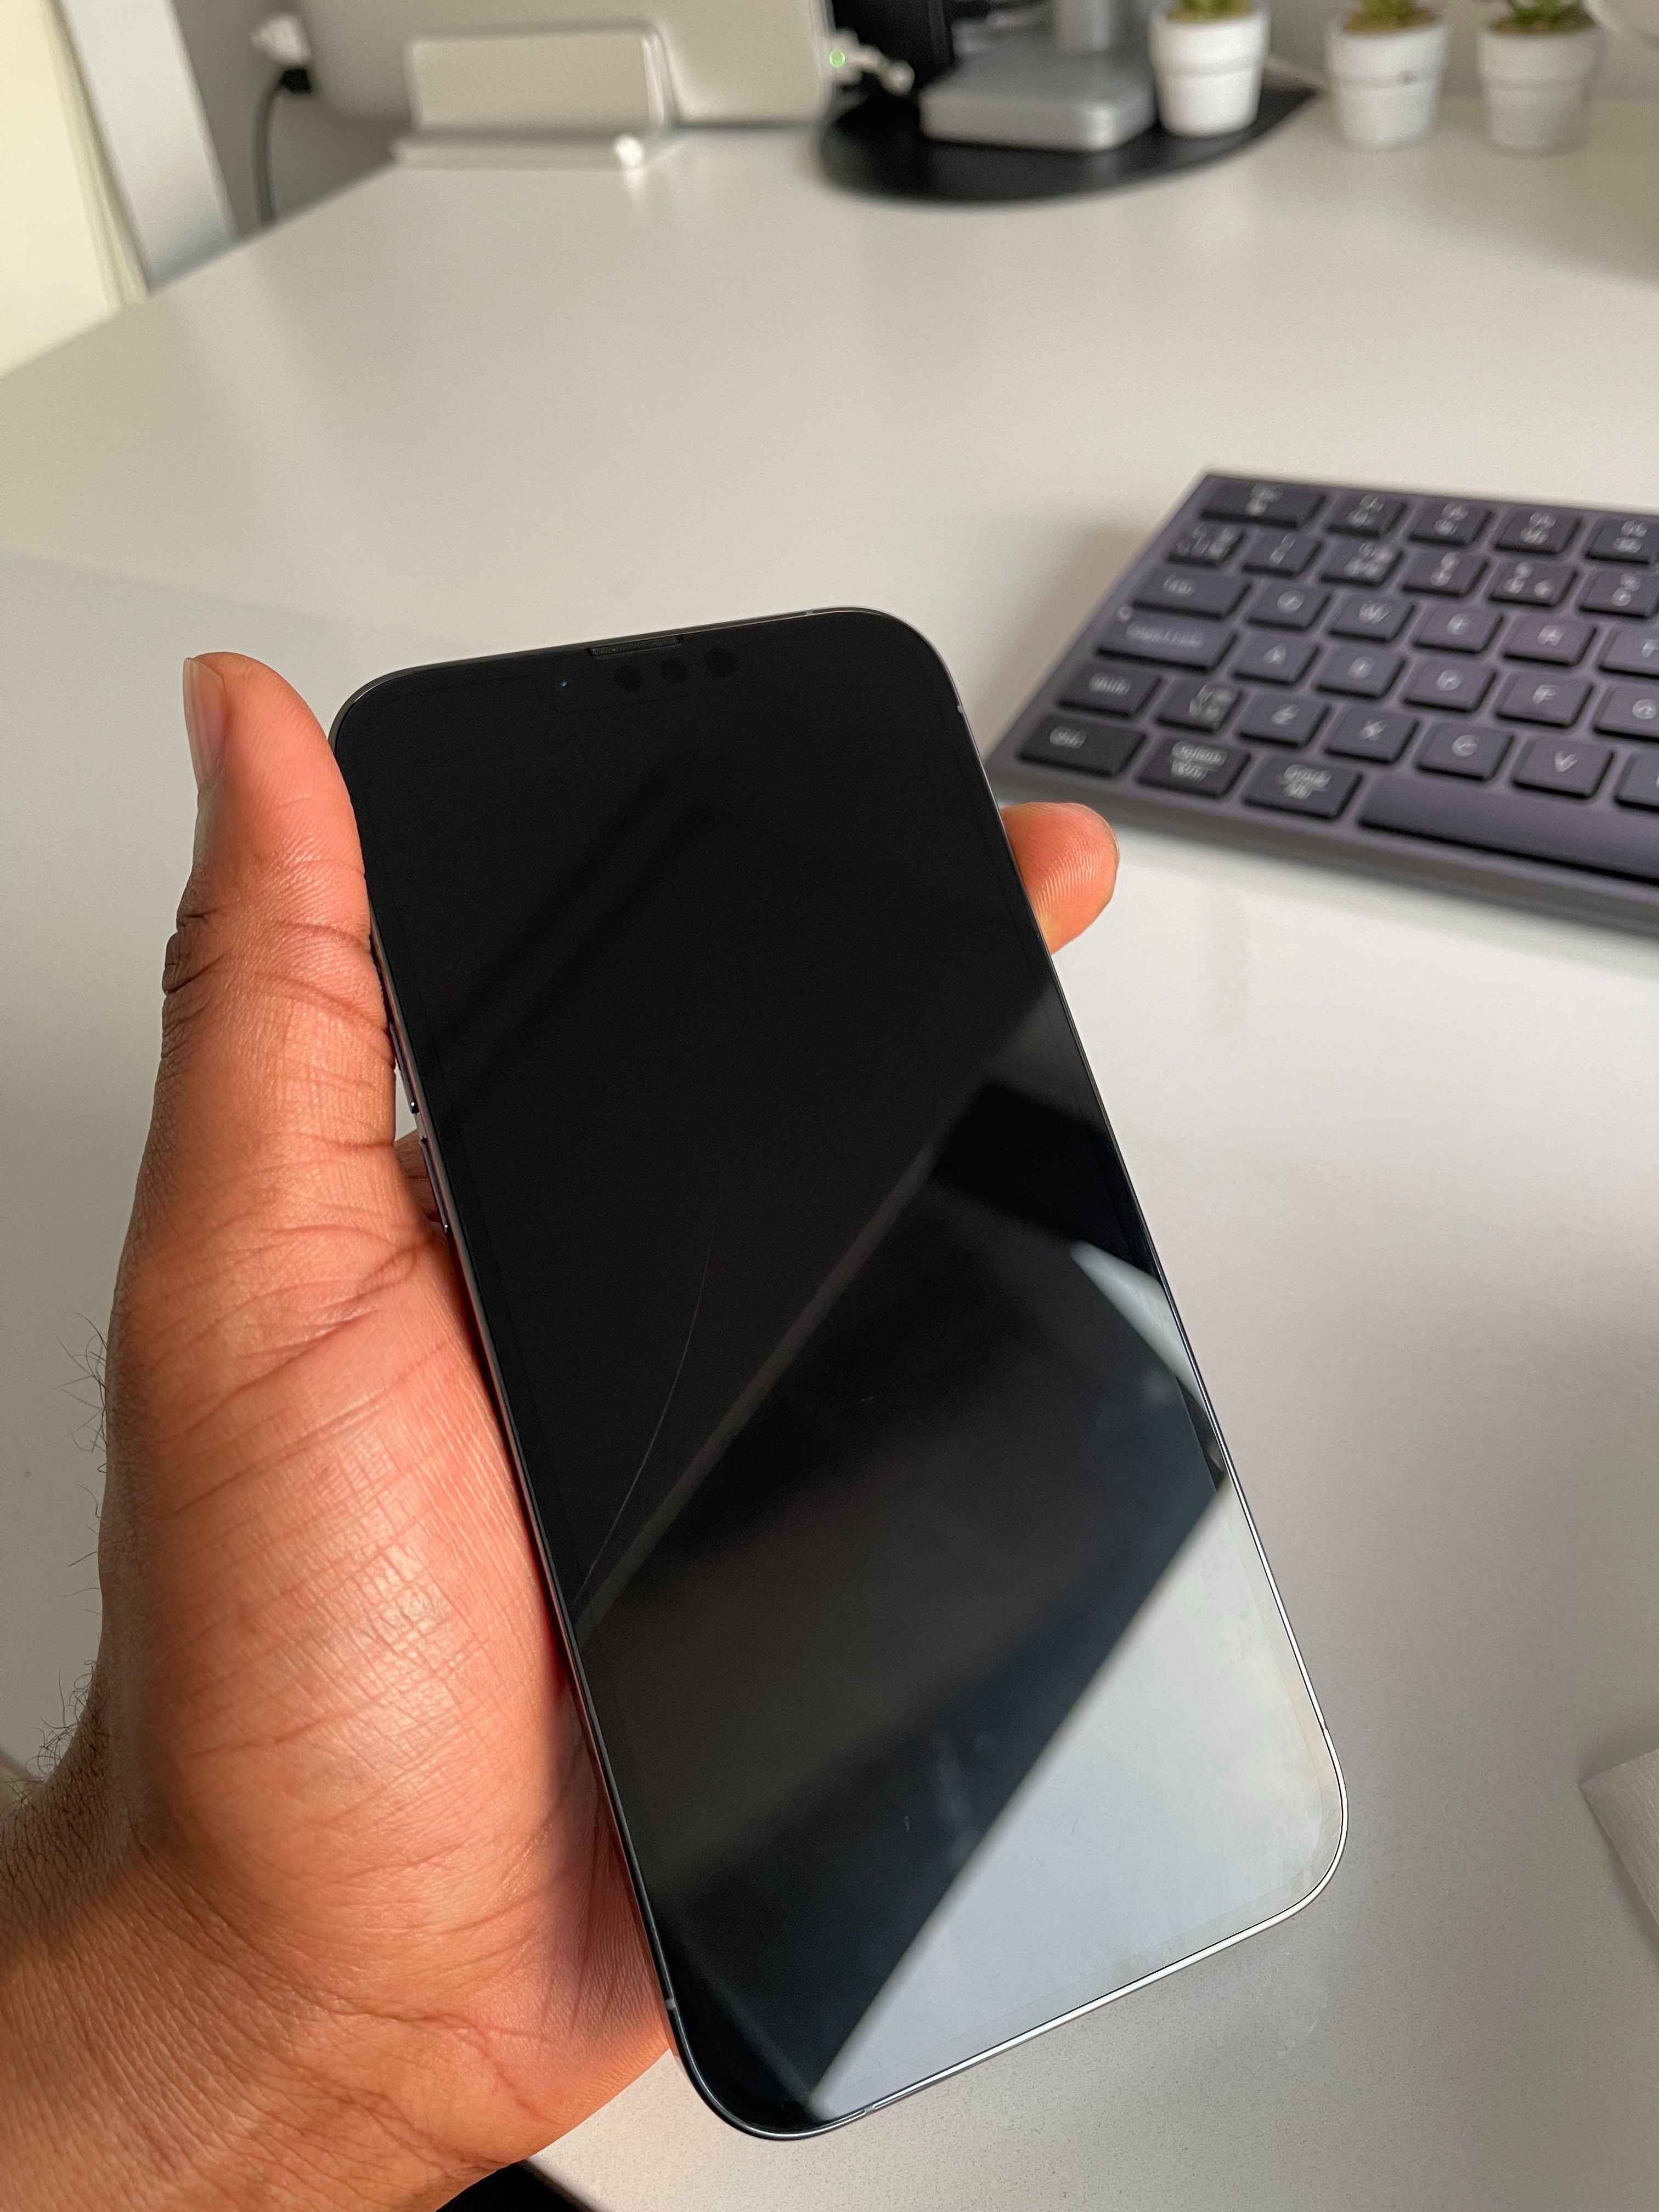 iPhone 13 Pro Max micro scratch on screen - Apple Community